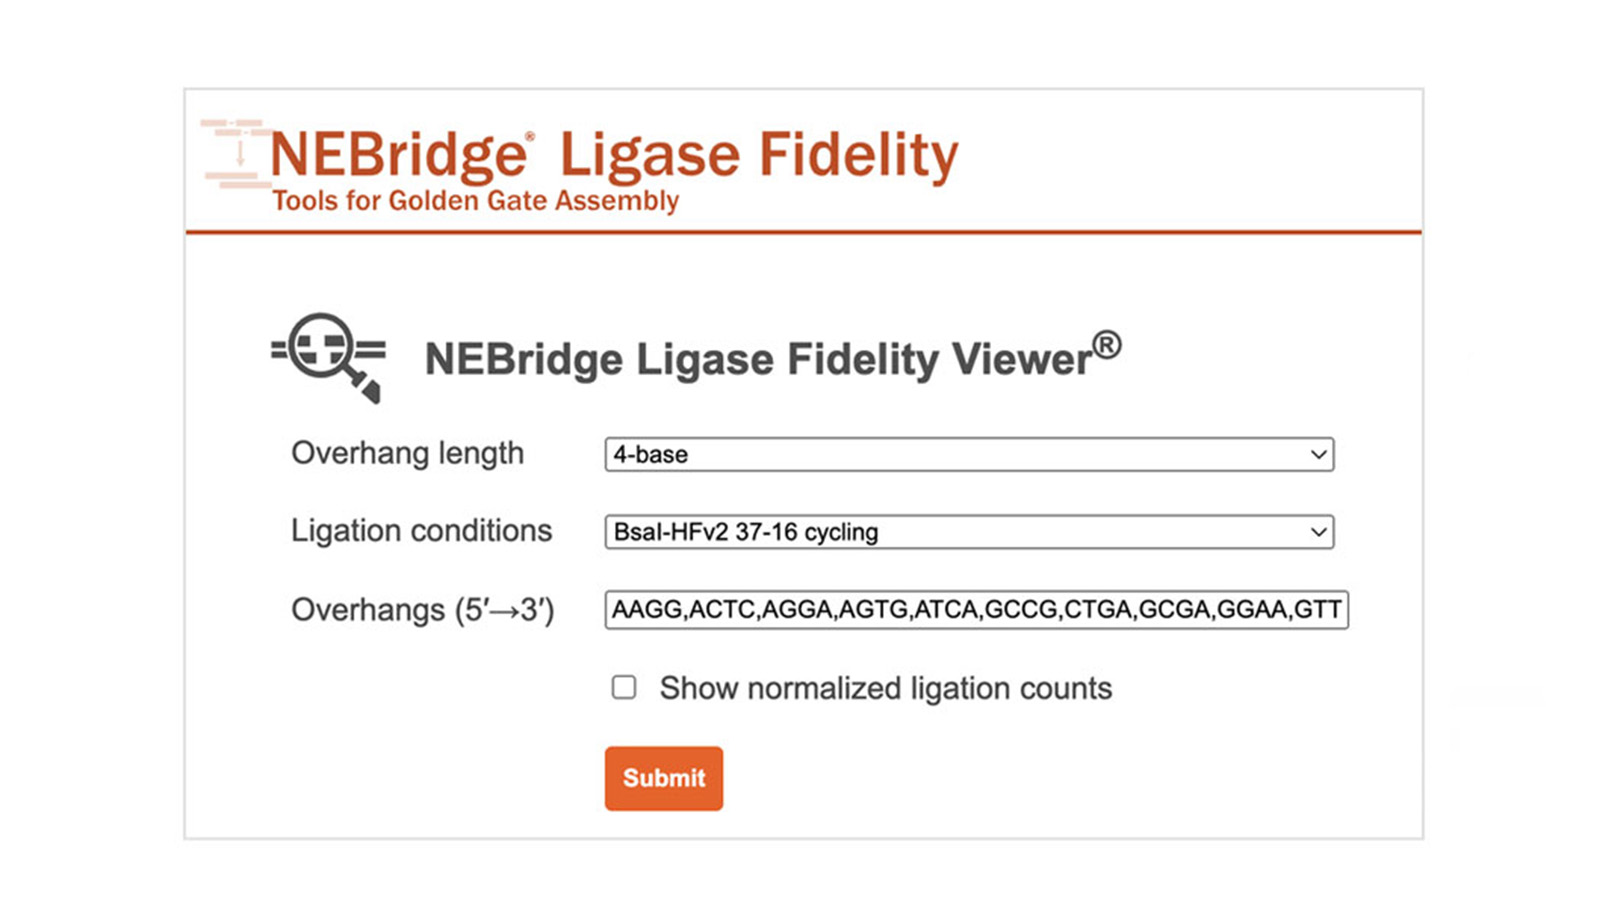 Image of the NEBridge Ligase Fidelity Tool